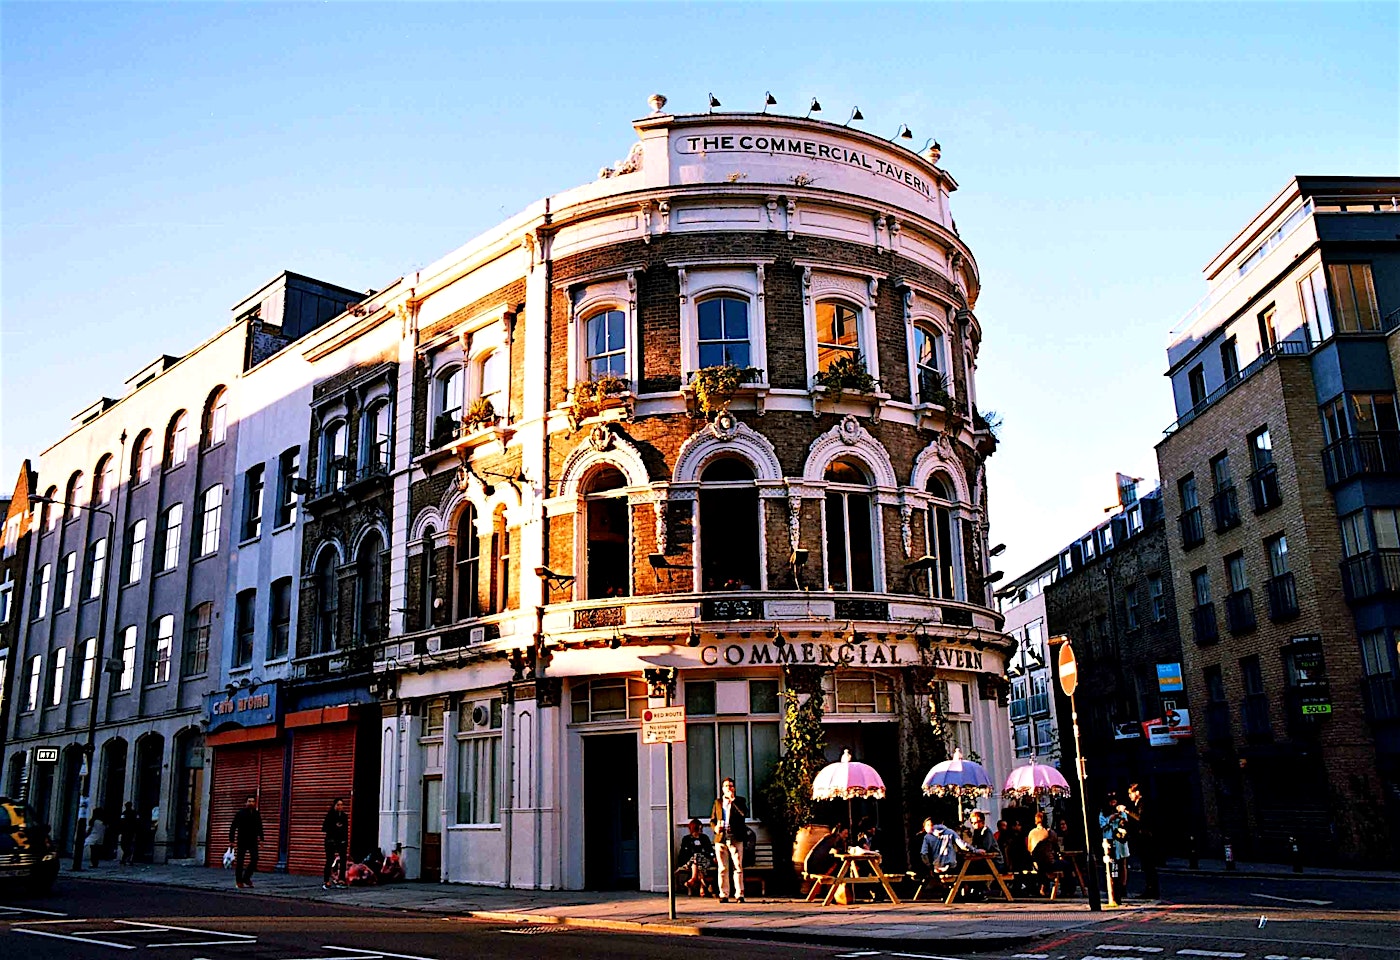 commercial tavern spitalfields bar